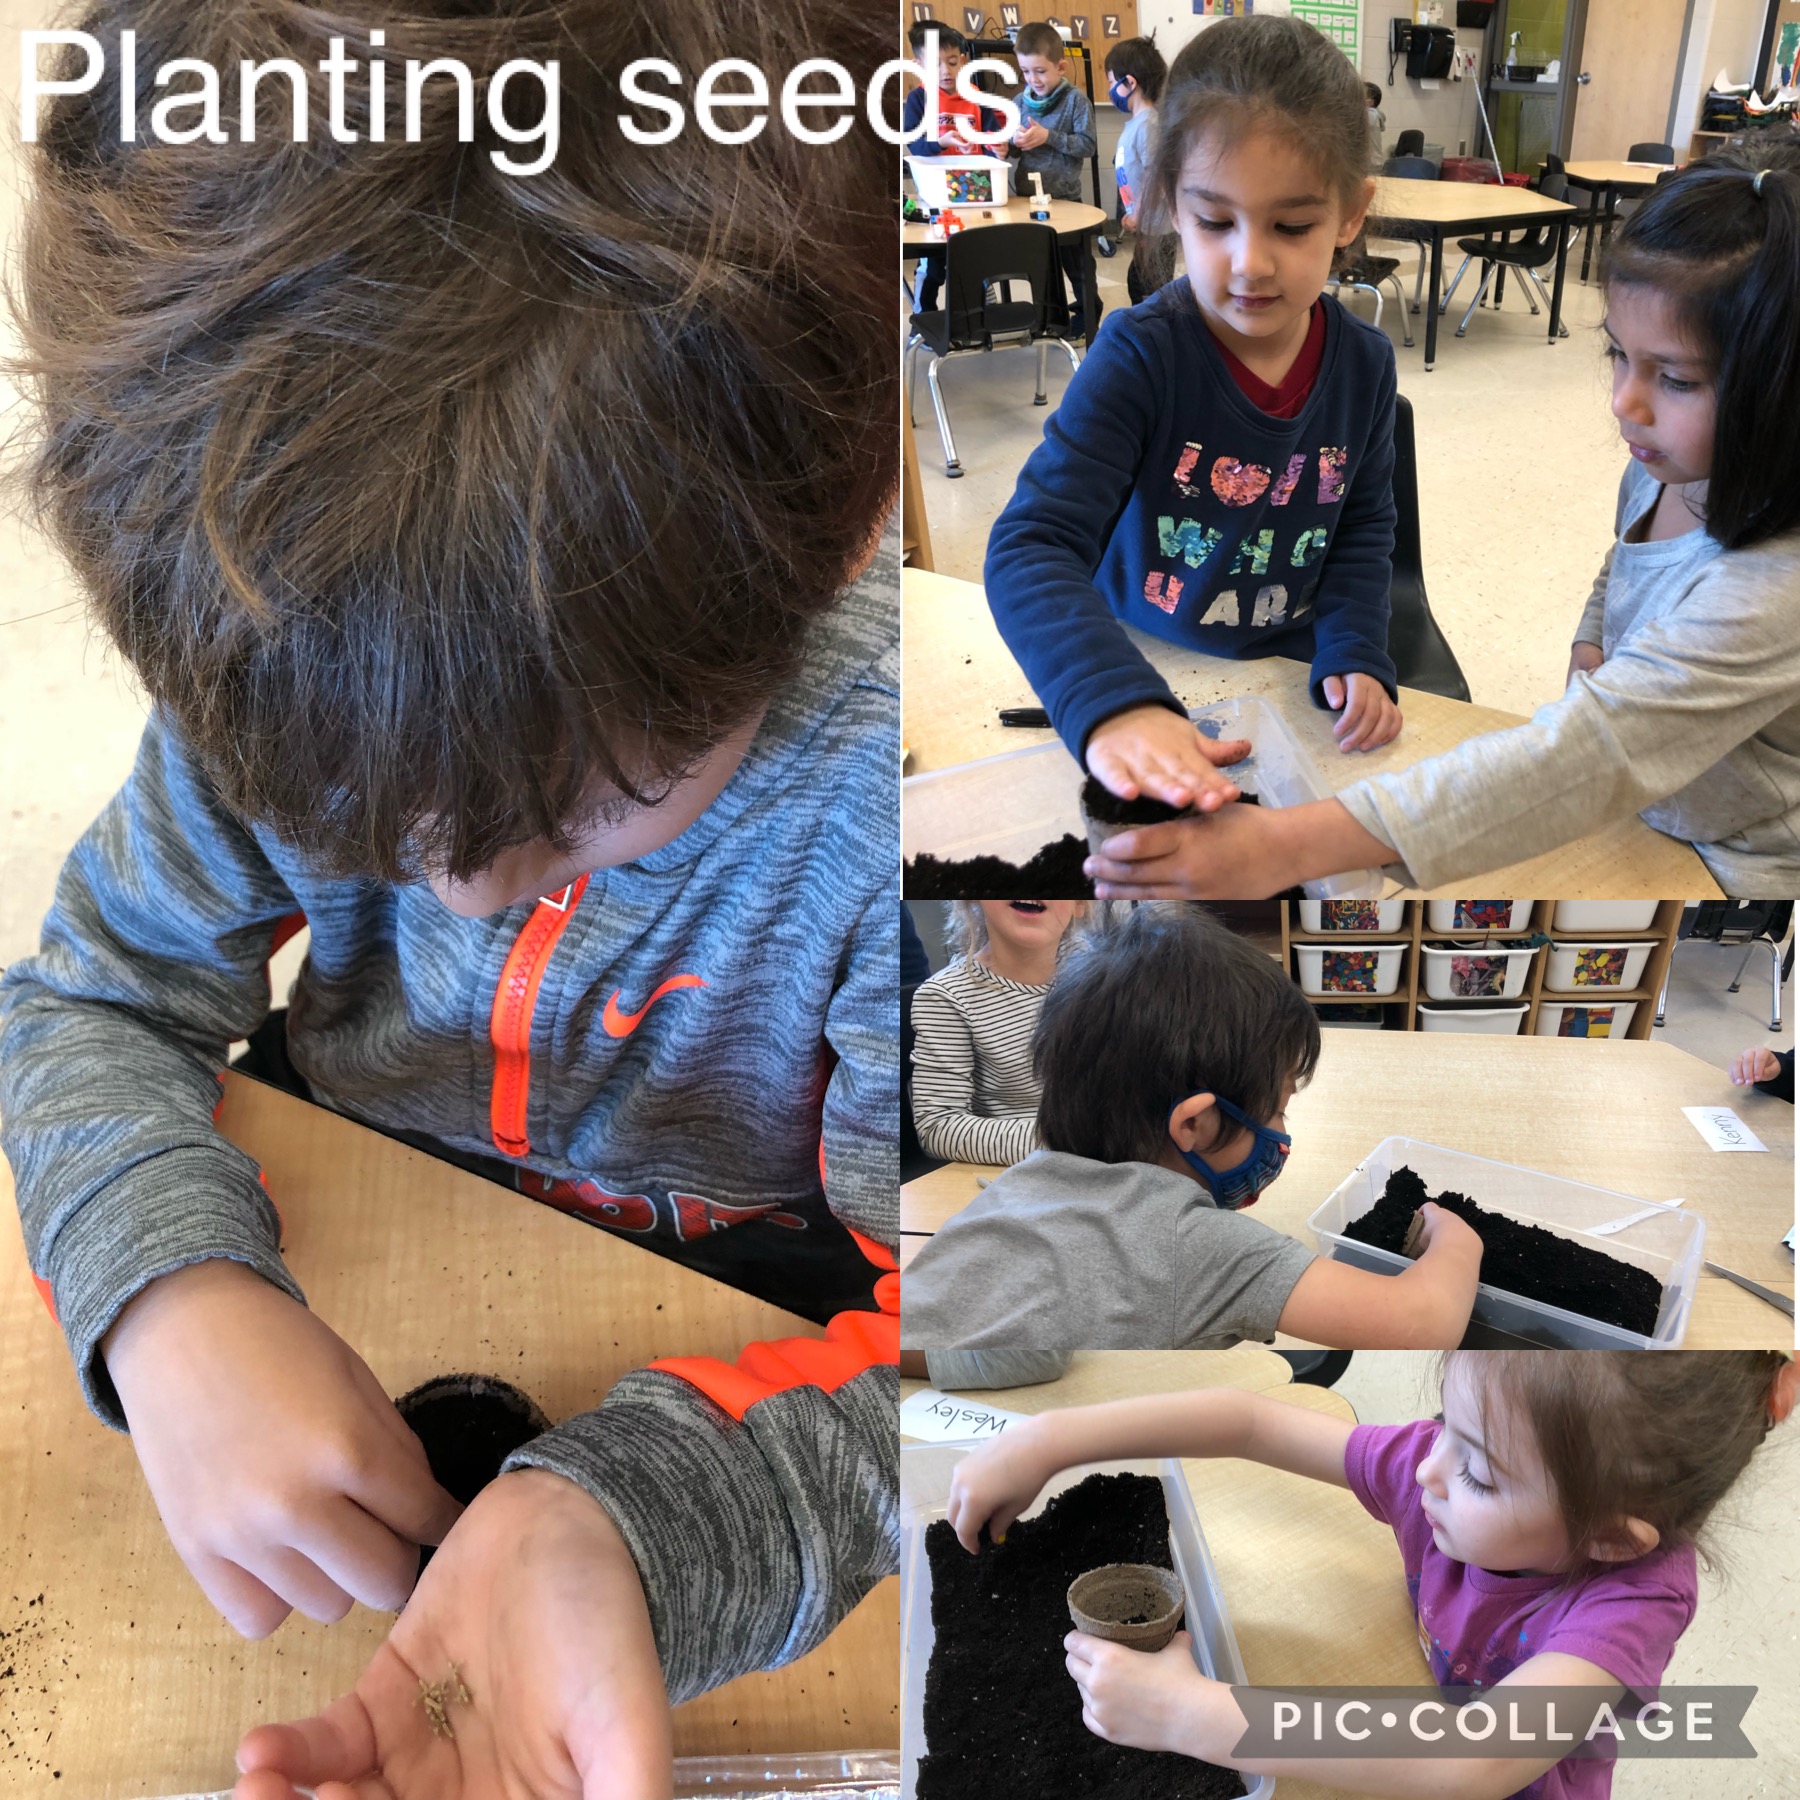 Kids planting some seeds